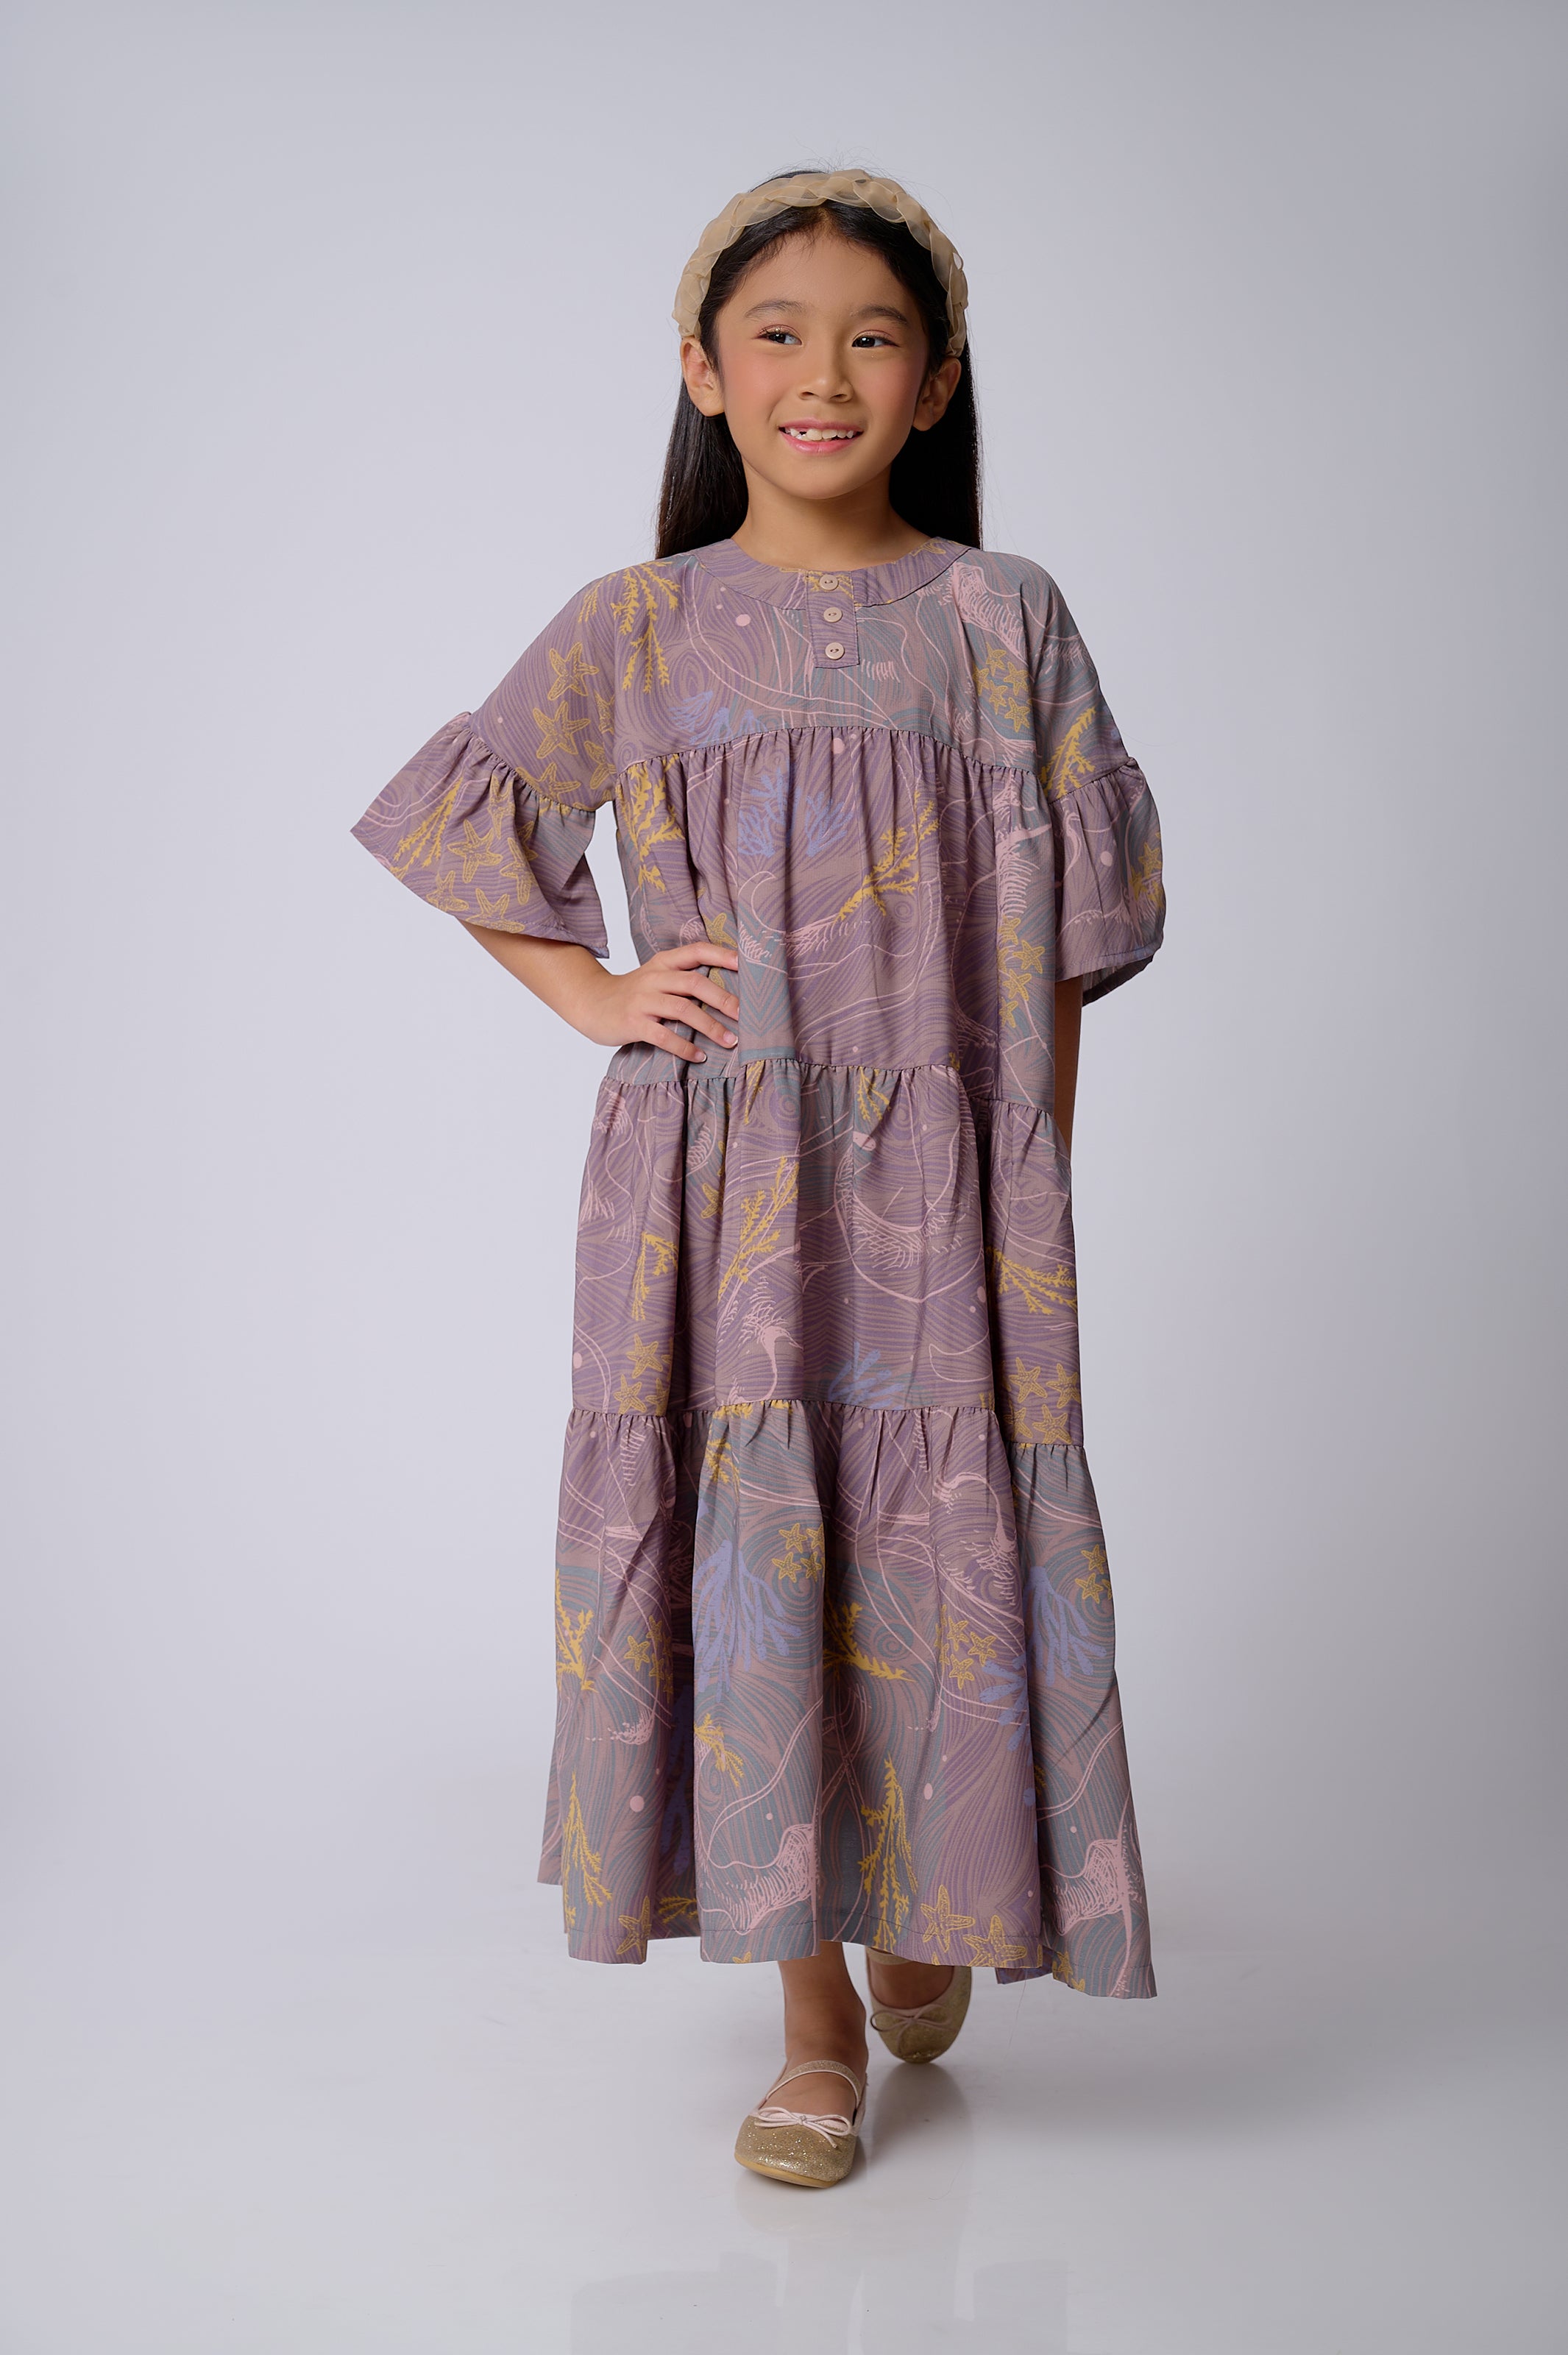 ZM Zaskia Mecca - Unasya Brown Dress Anak - Jelita Indonesia - Edisi Derawan